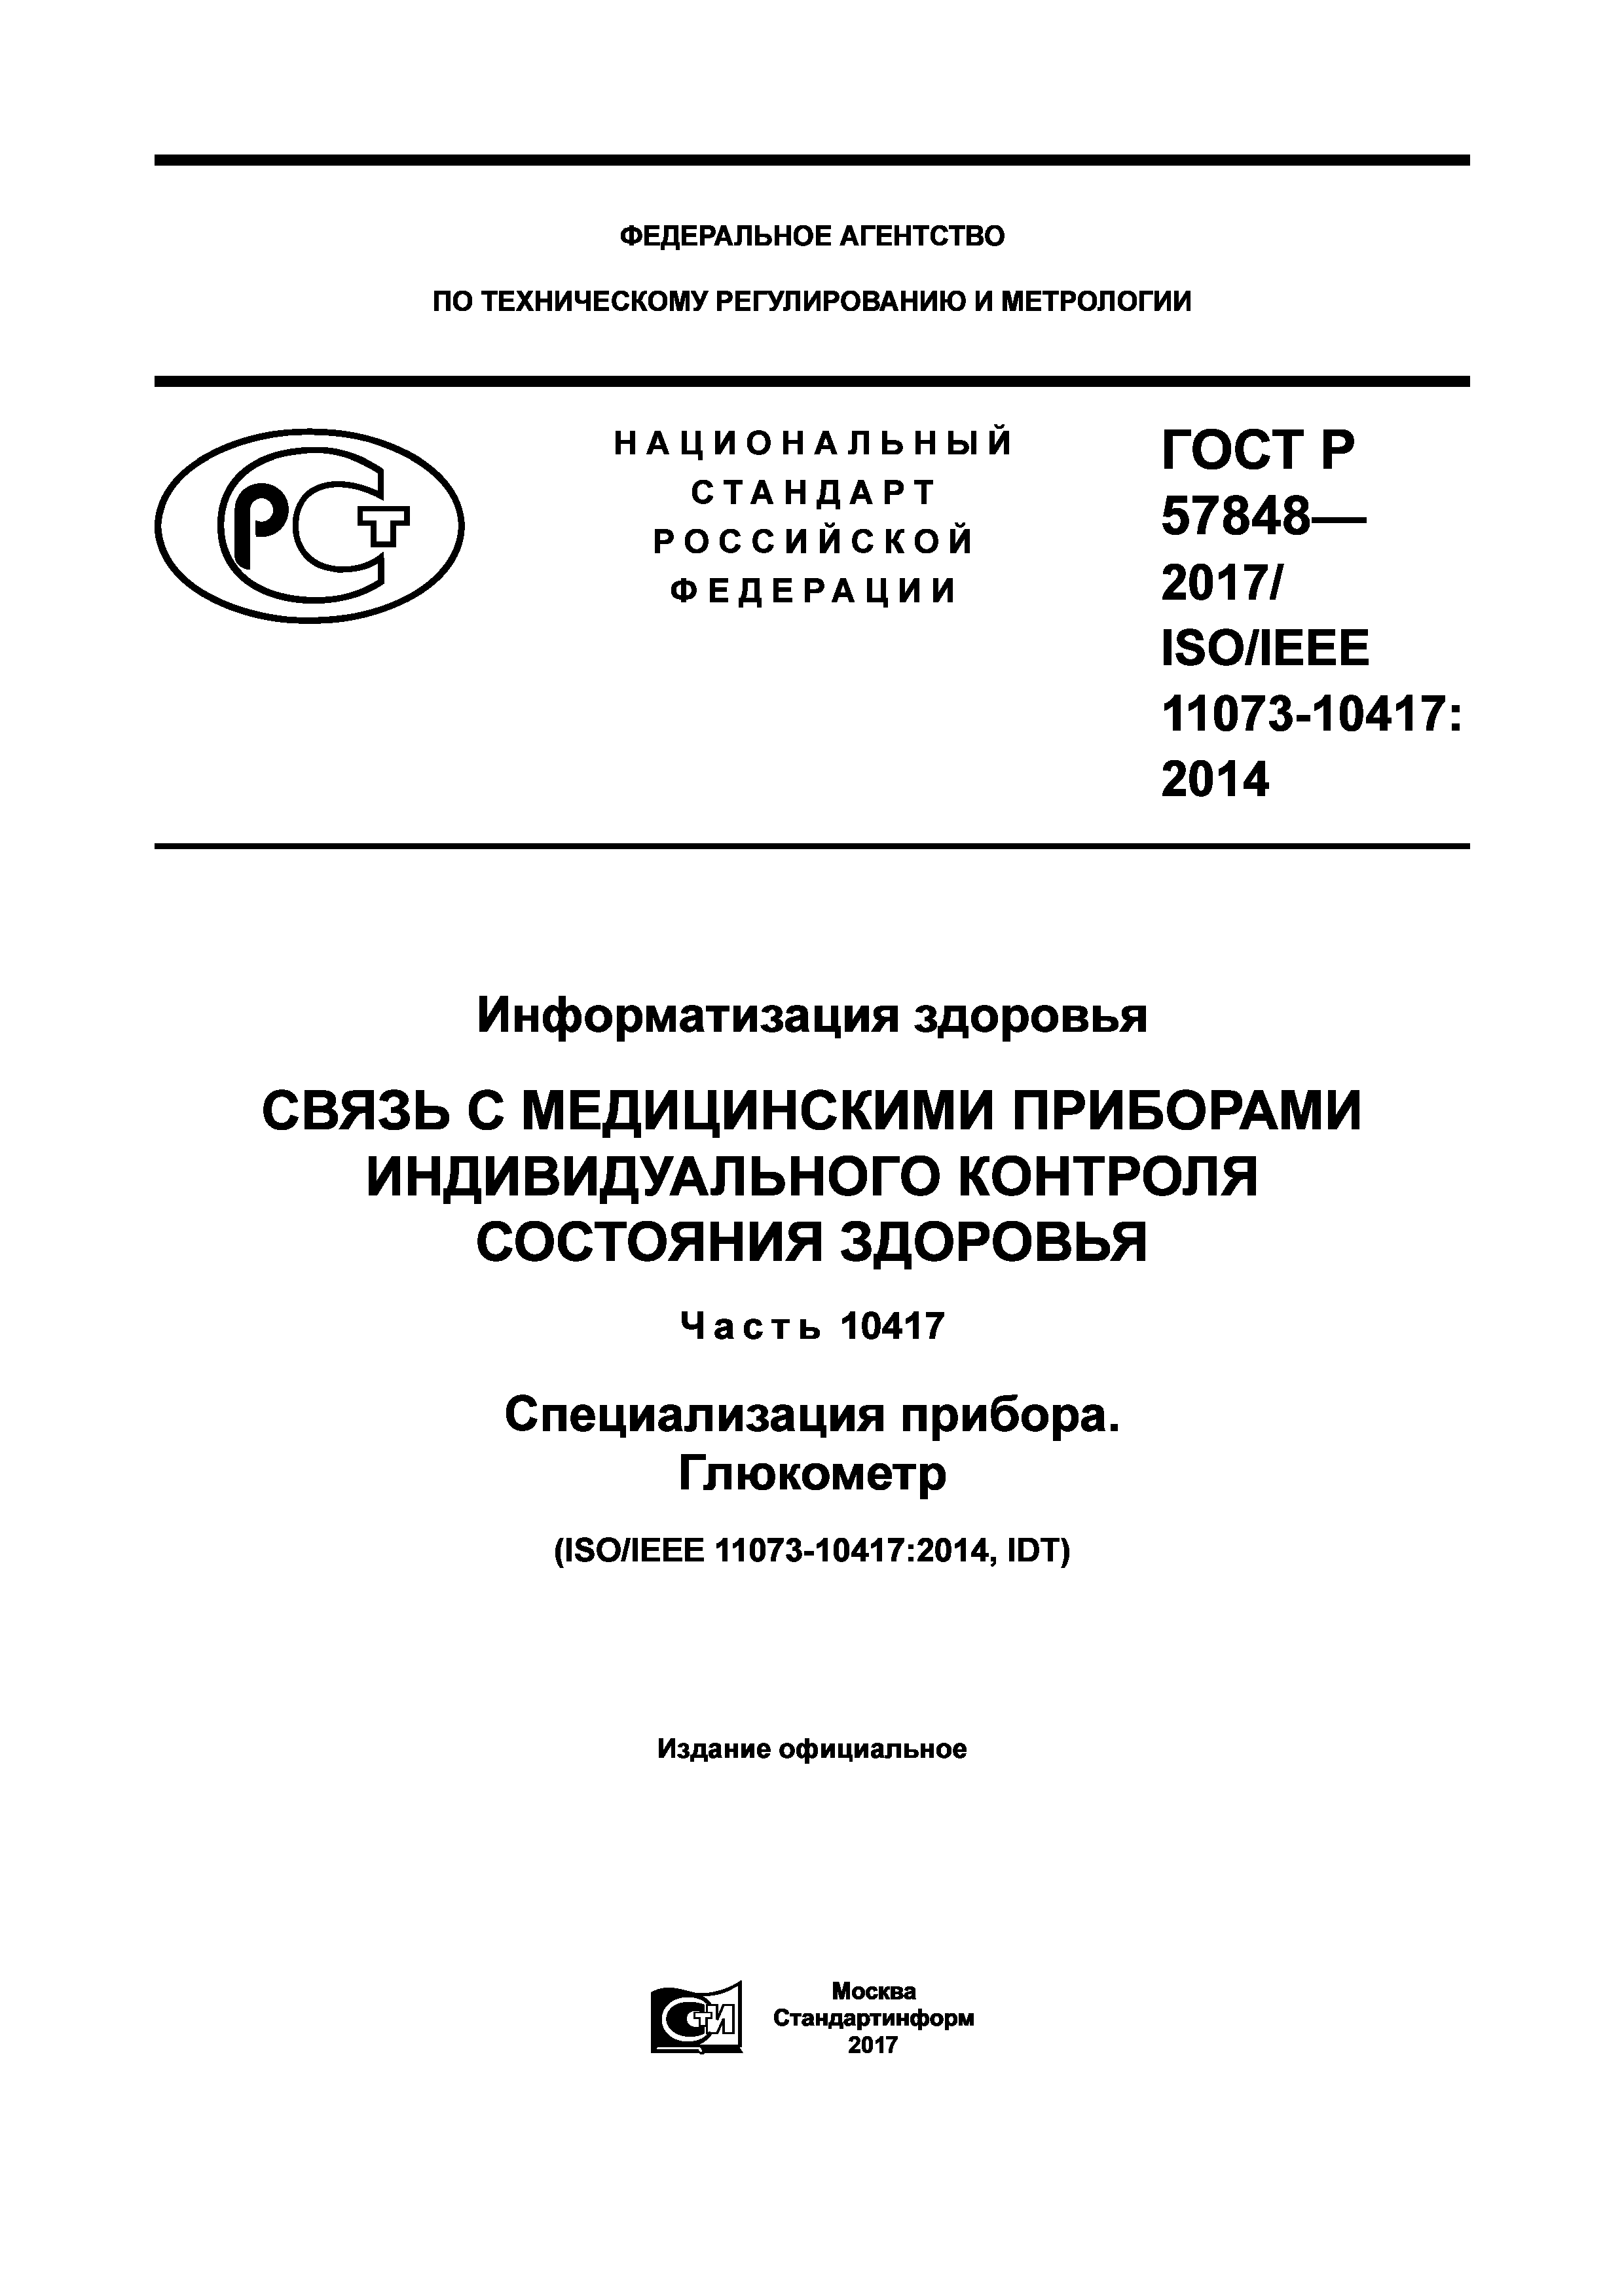 ГОСТ Р 57848-2017